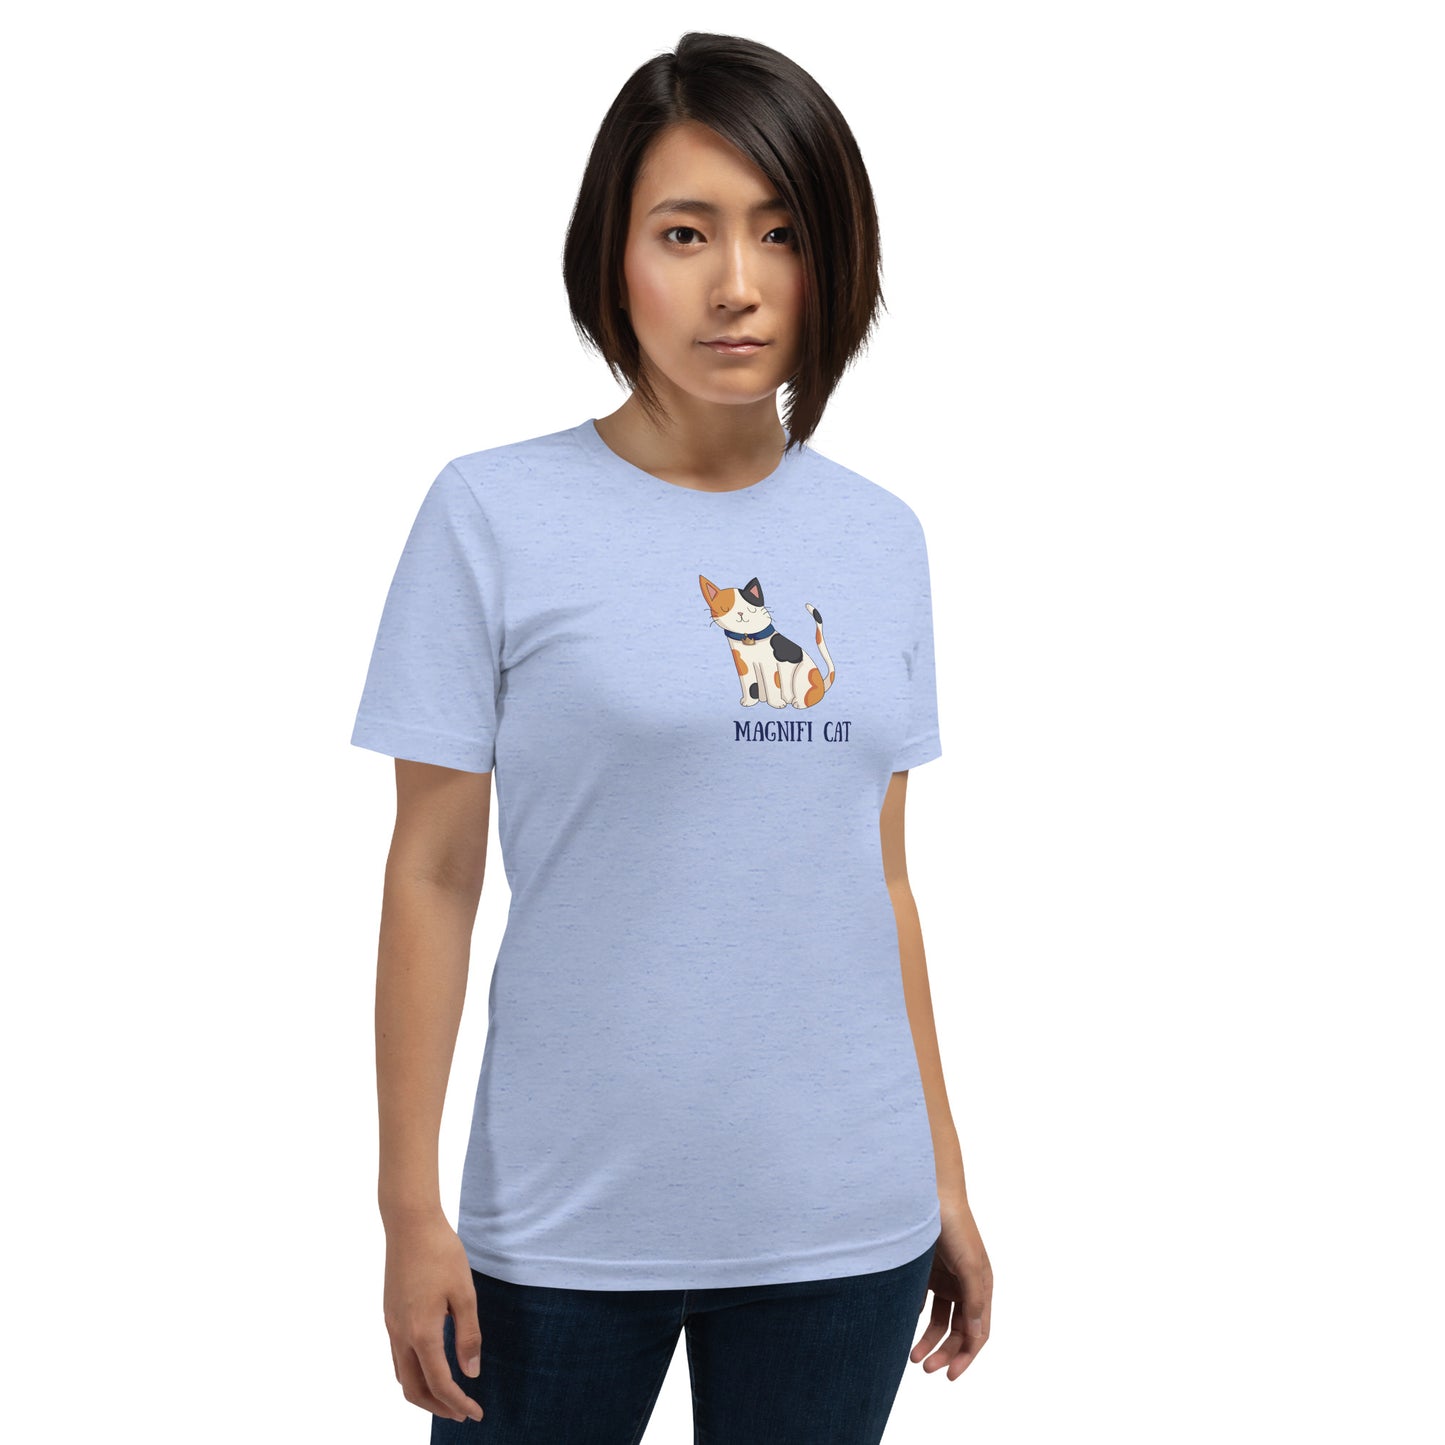 Magnifi Cat - Unisex T-Shirt